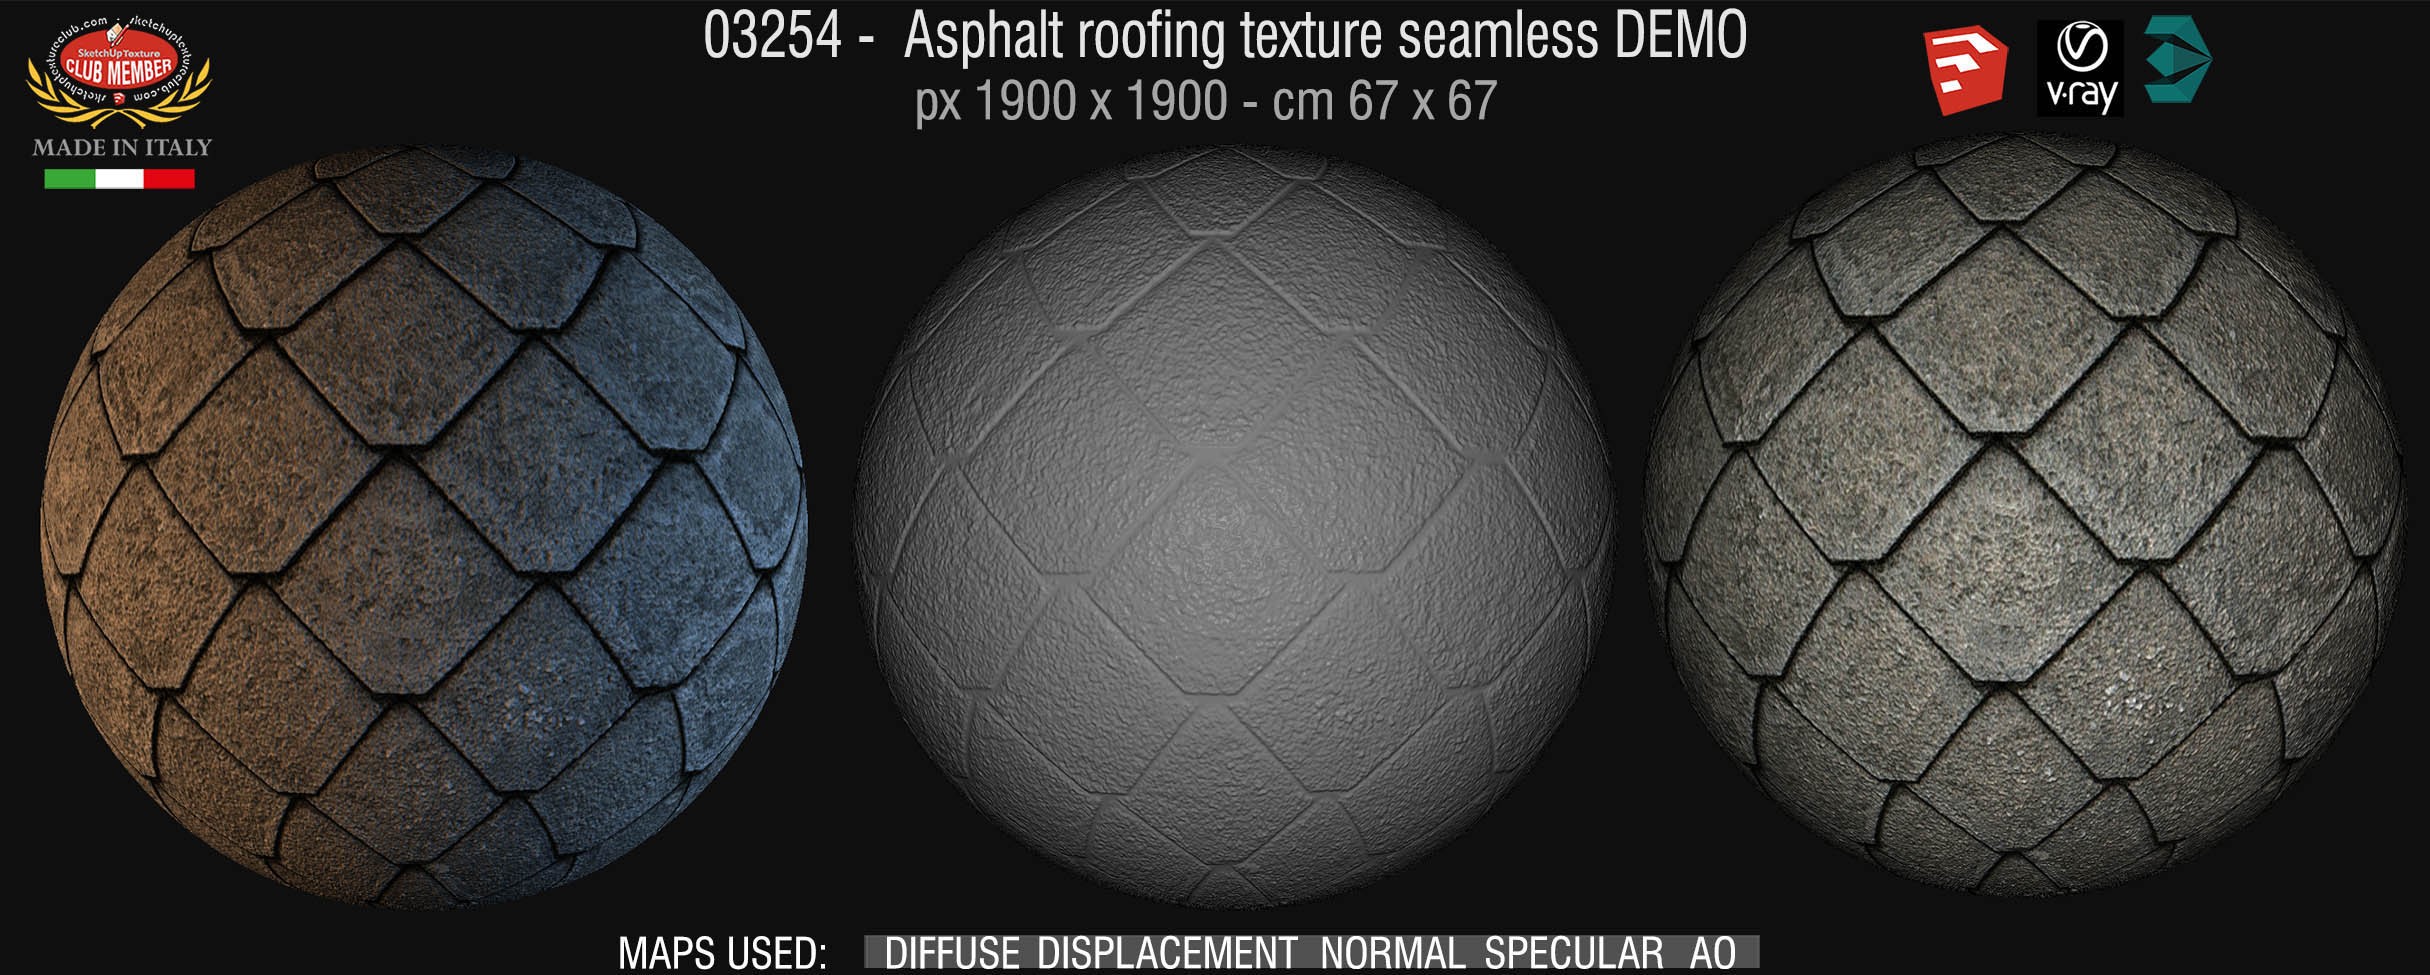 03254 Asphalt roofing texture DEMO